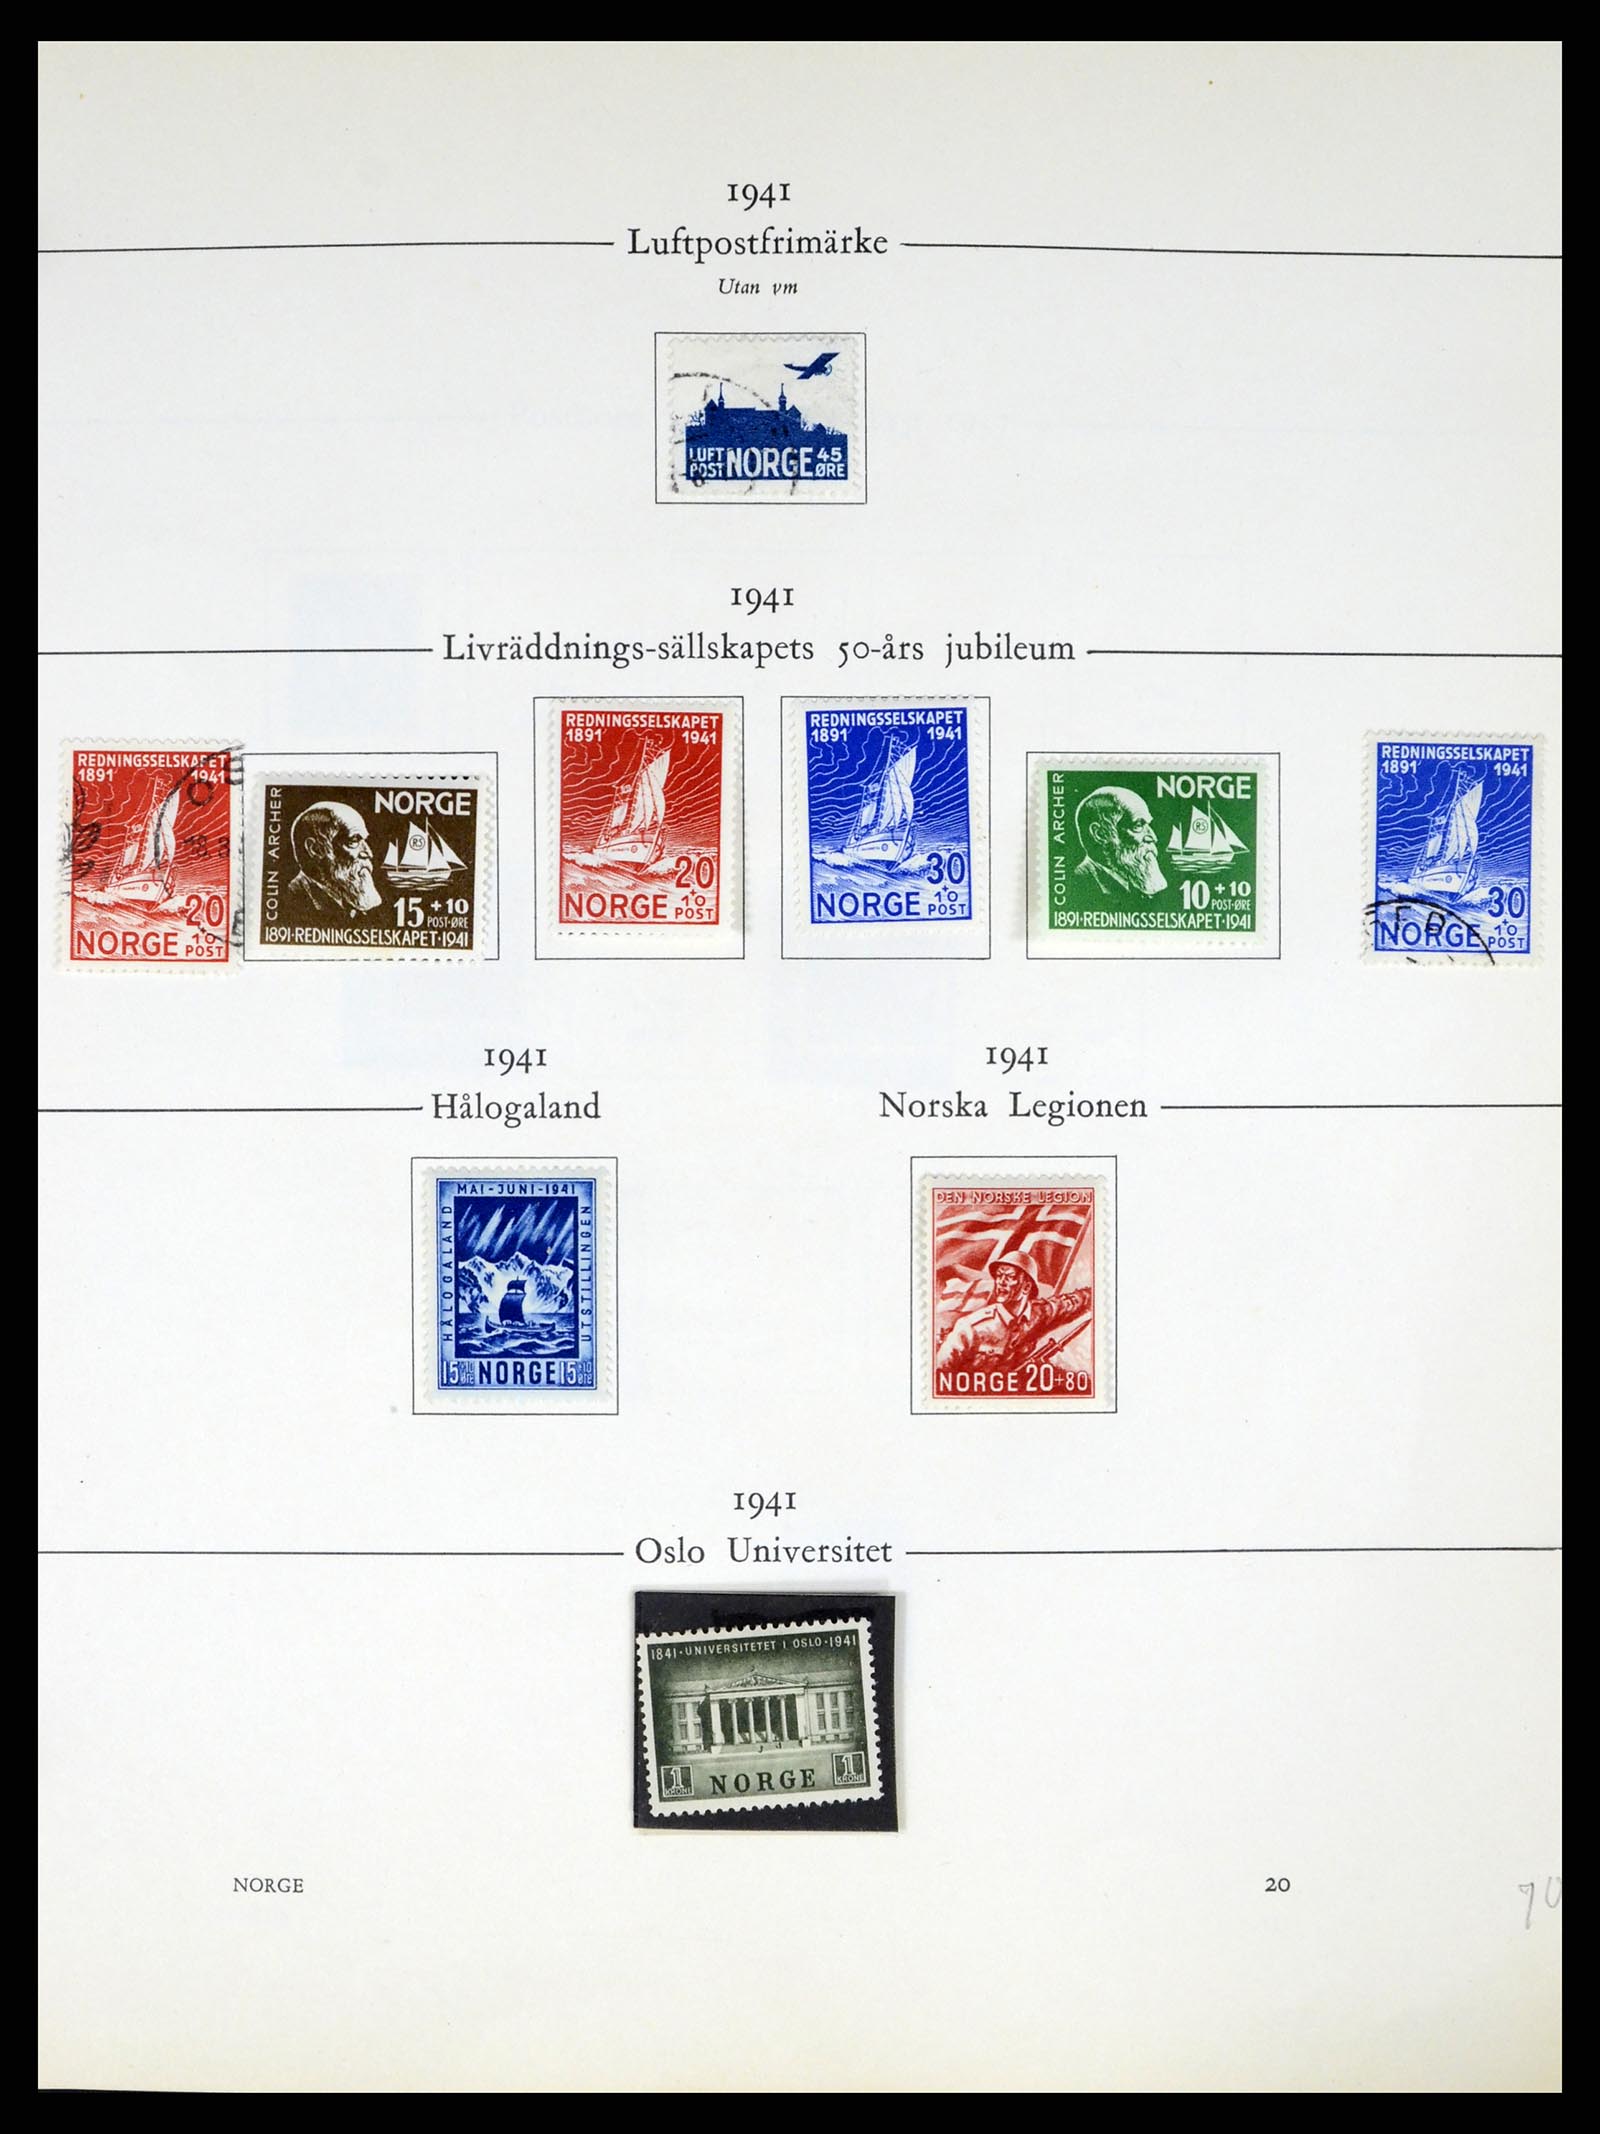 37387 020 - Stamp collection 37387 Scandinavia 1851-1960.